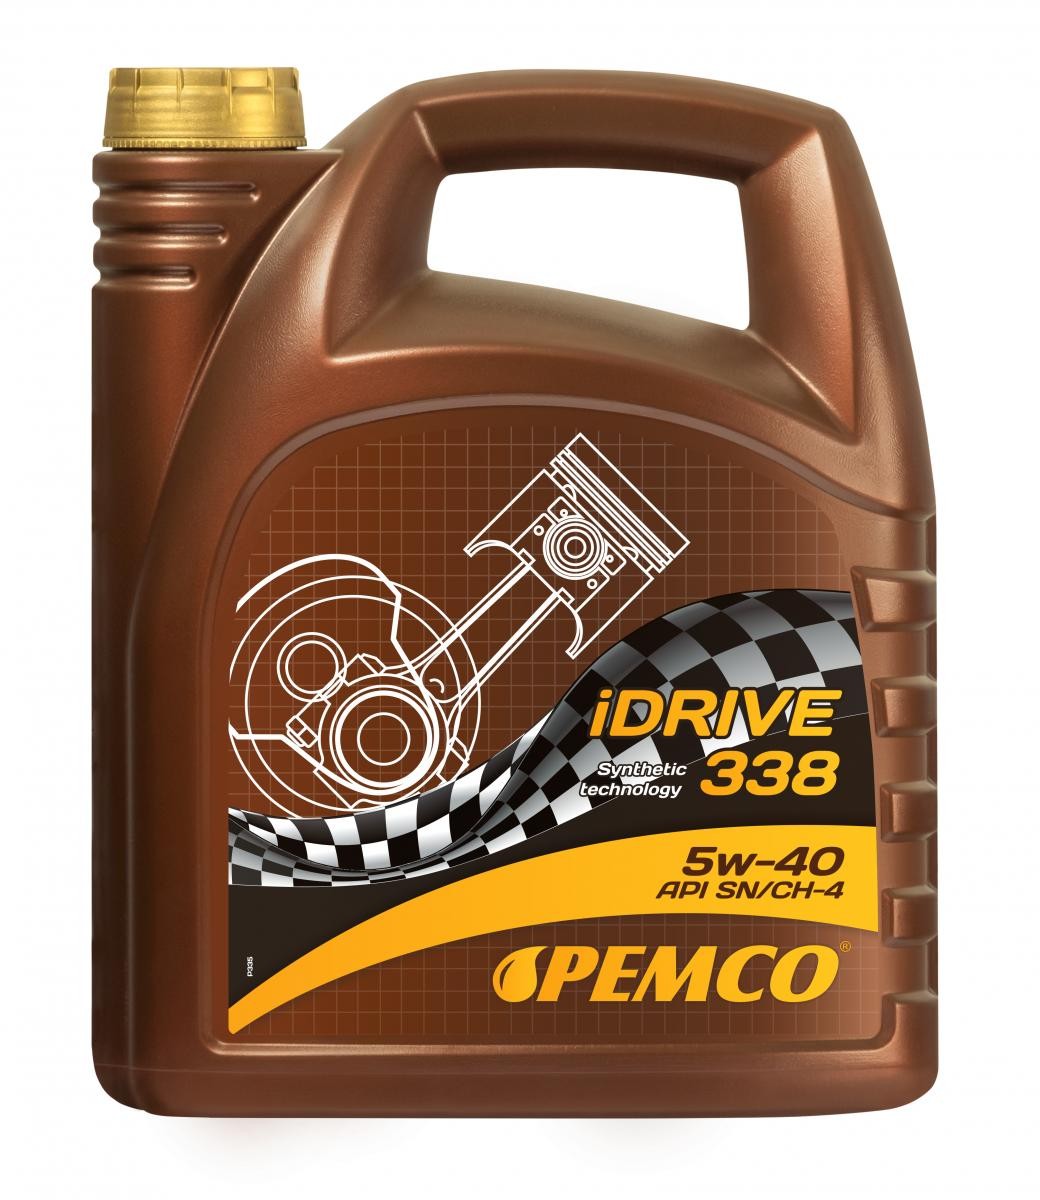 Motor oil PEMCO 5W-40, 4l, Synthetic Oil longlife PM0338-4